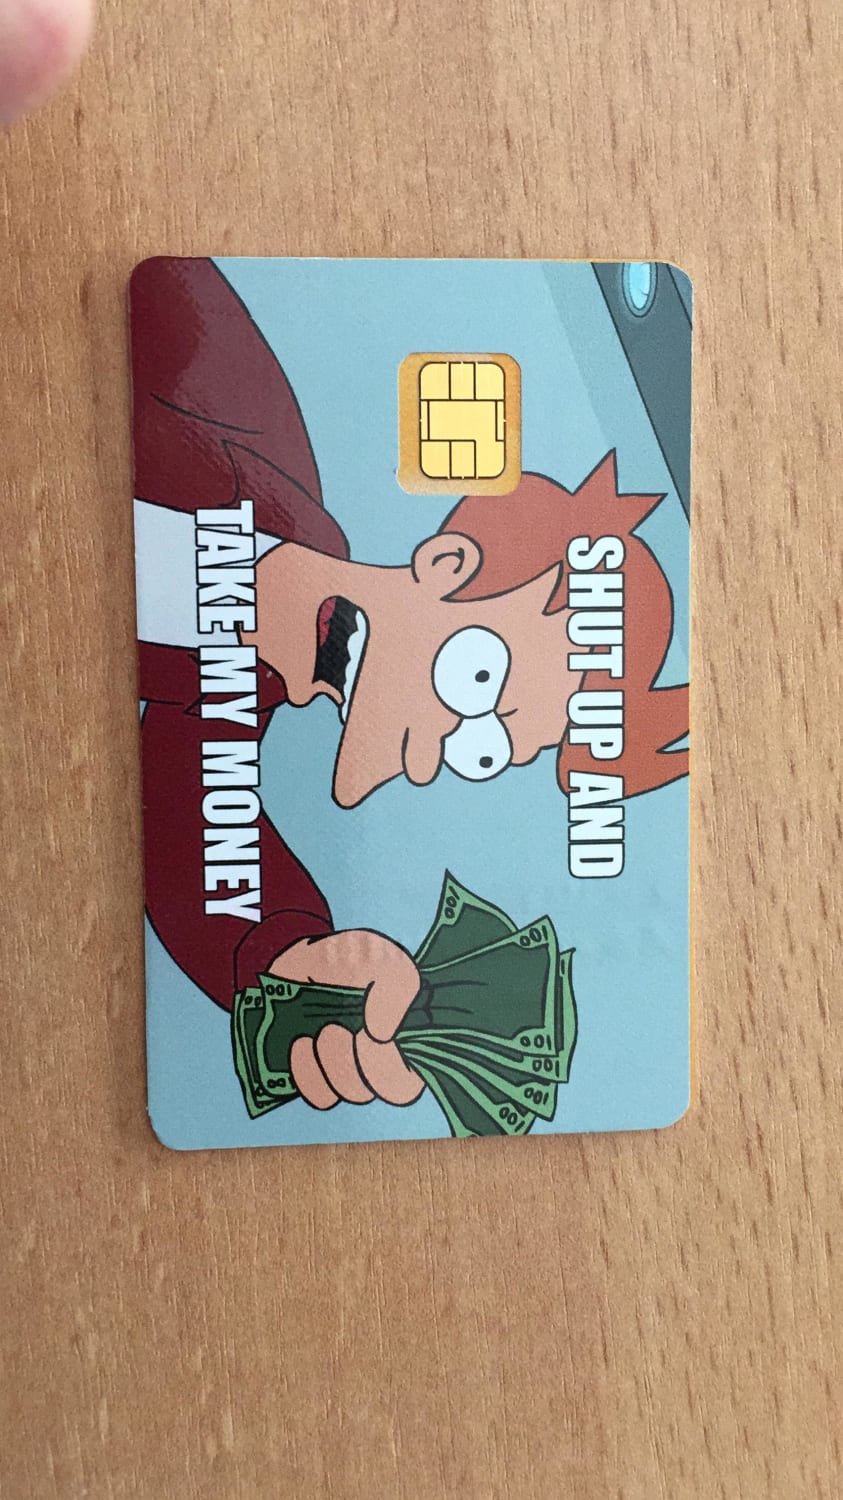 How do you guys like my new debit card decal?